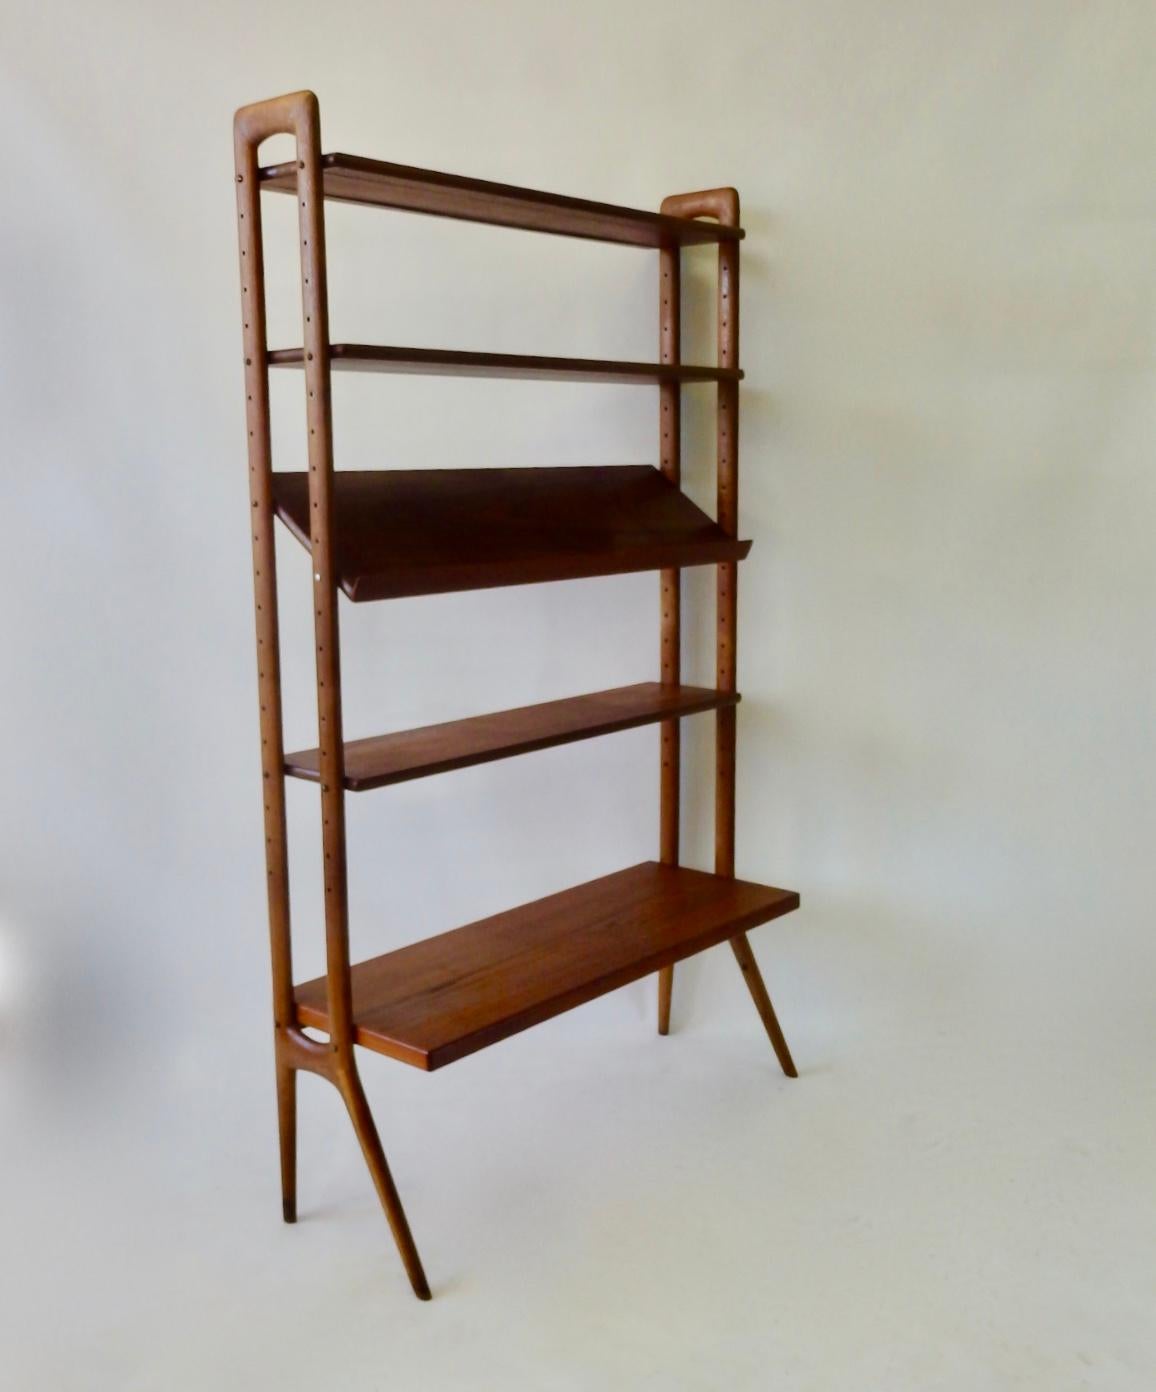 Modular and adjustable Danish teak wood bookshelf or room divider. Designed by Kurt Ostervig crafted by Povl Dinesen. Four shelves plus one angled display shelf. Lower shelf is deeper at 15.75